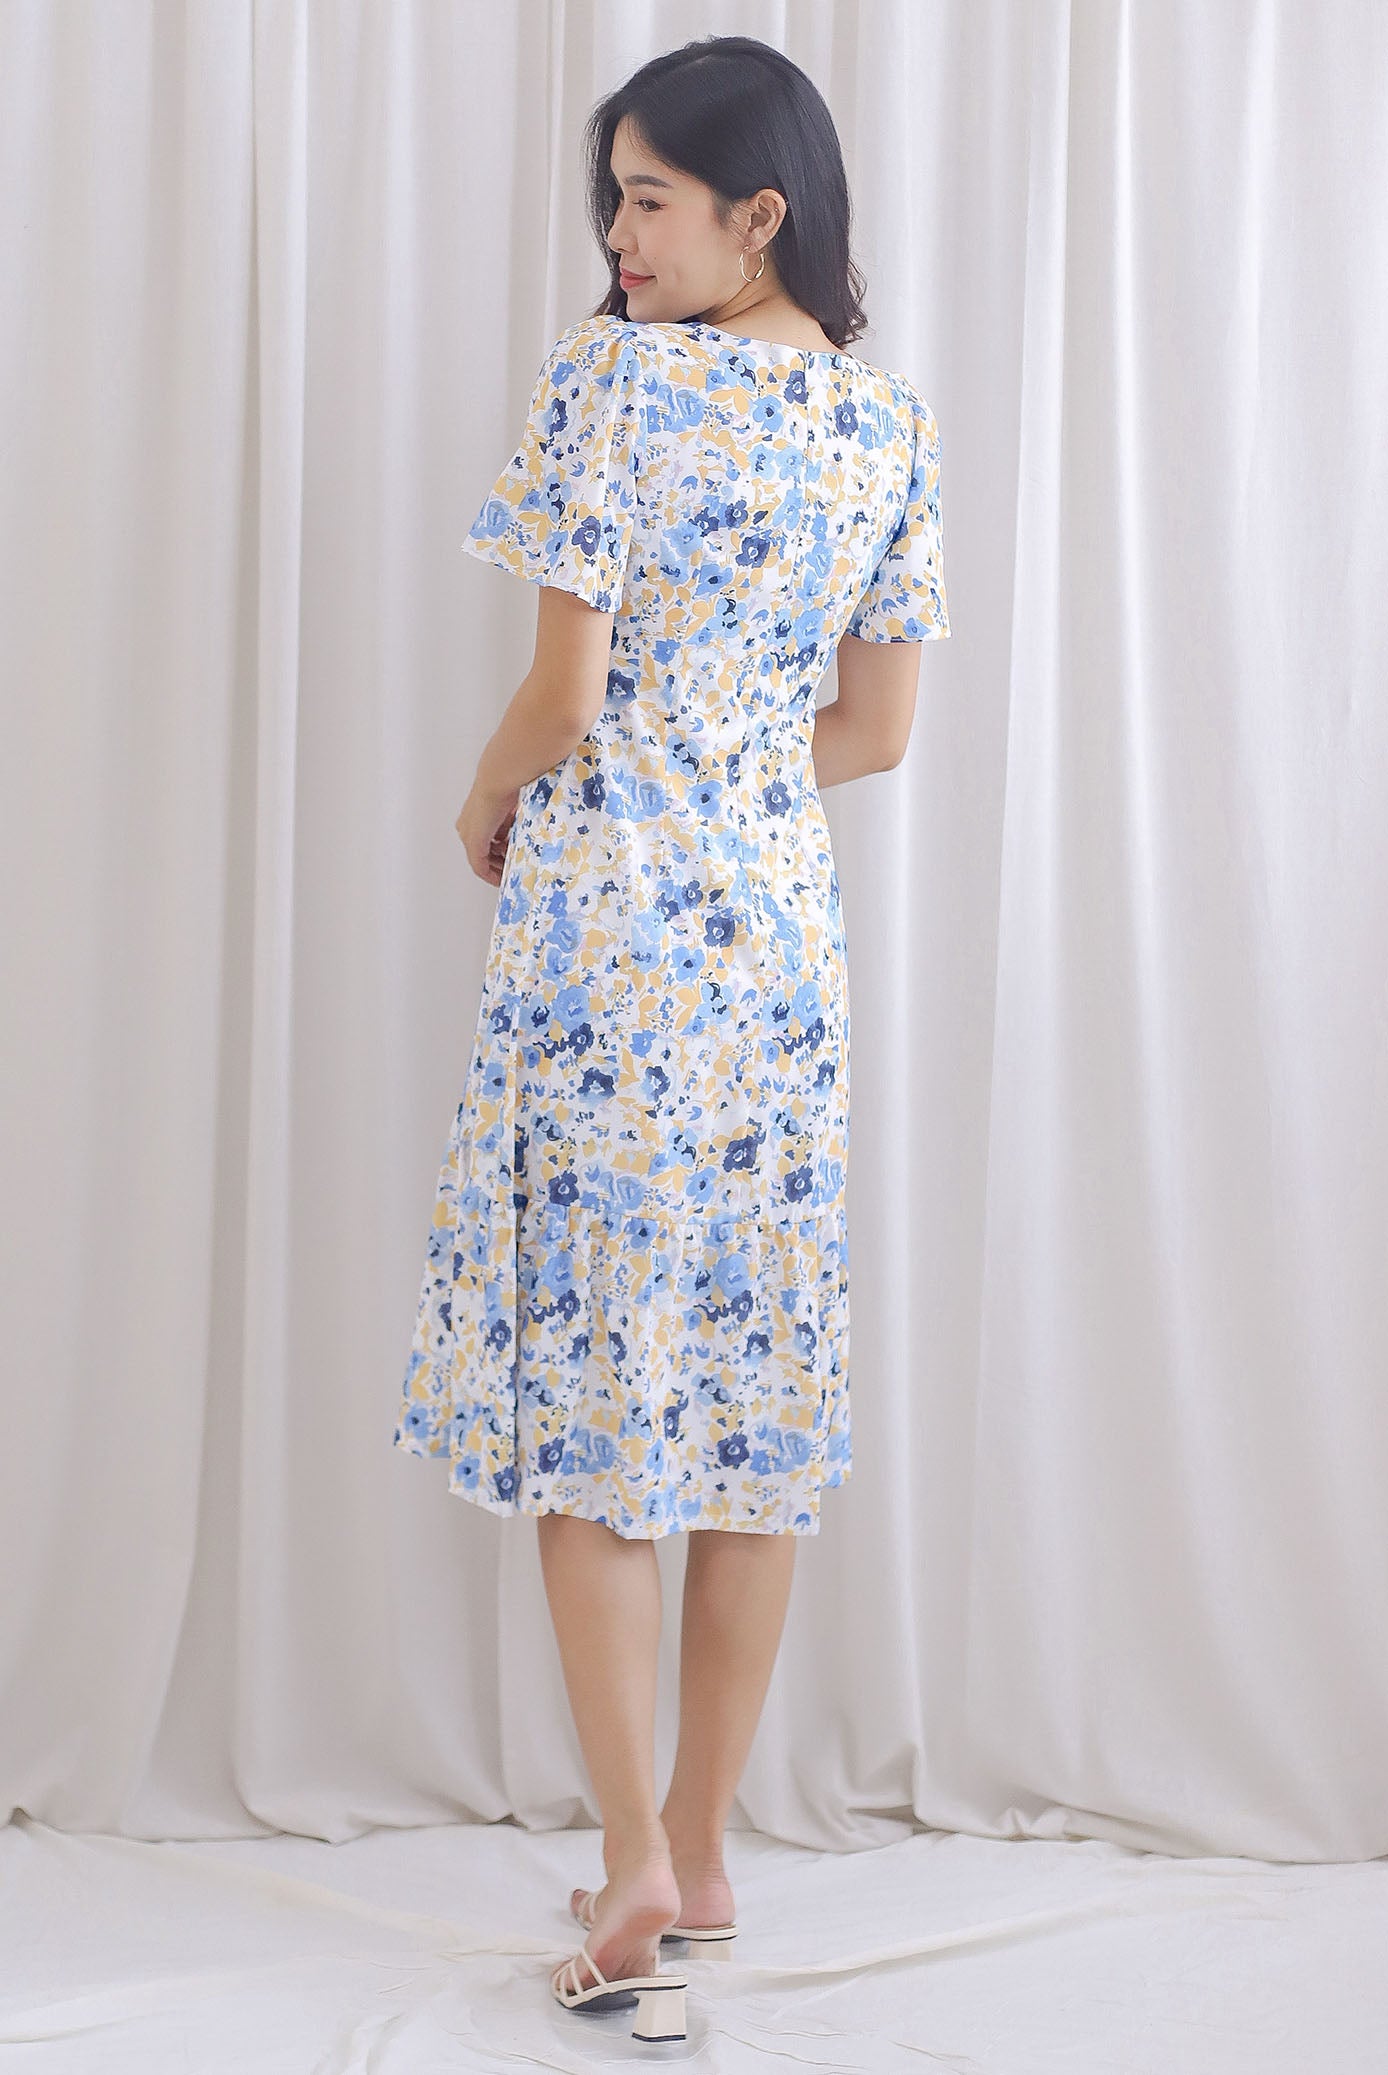 Blair Floral Flutter Sleeve Button Dress In White/Blue